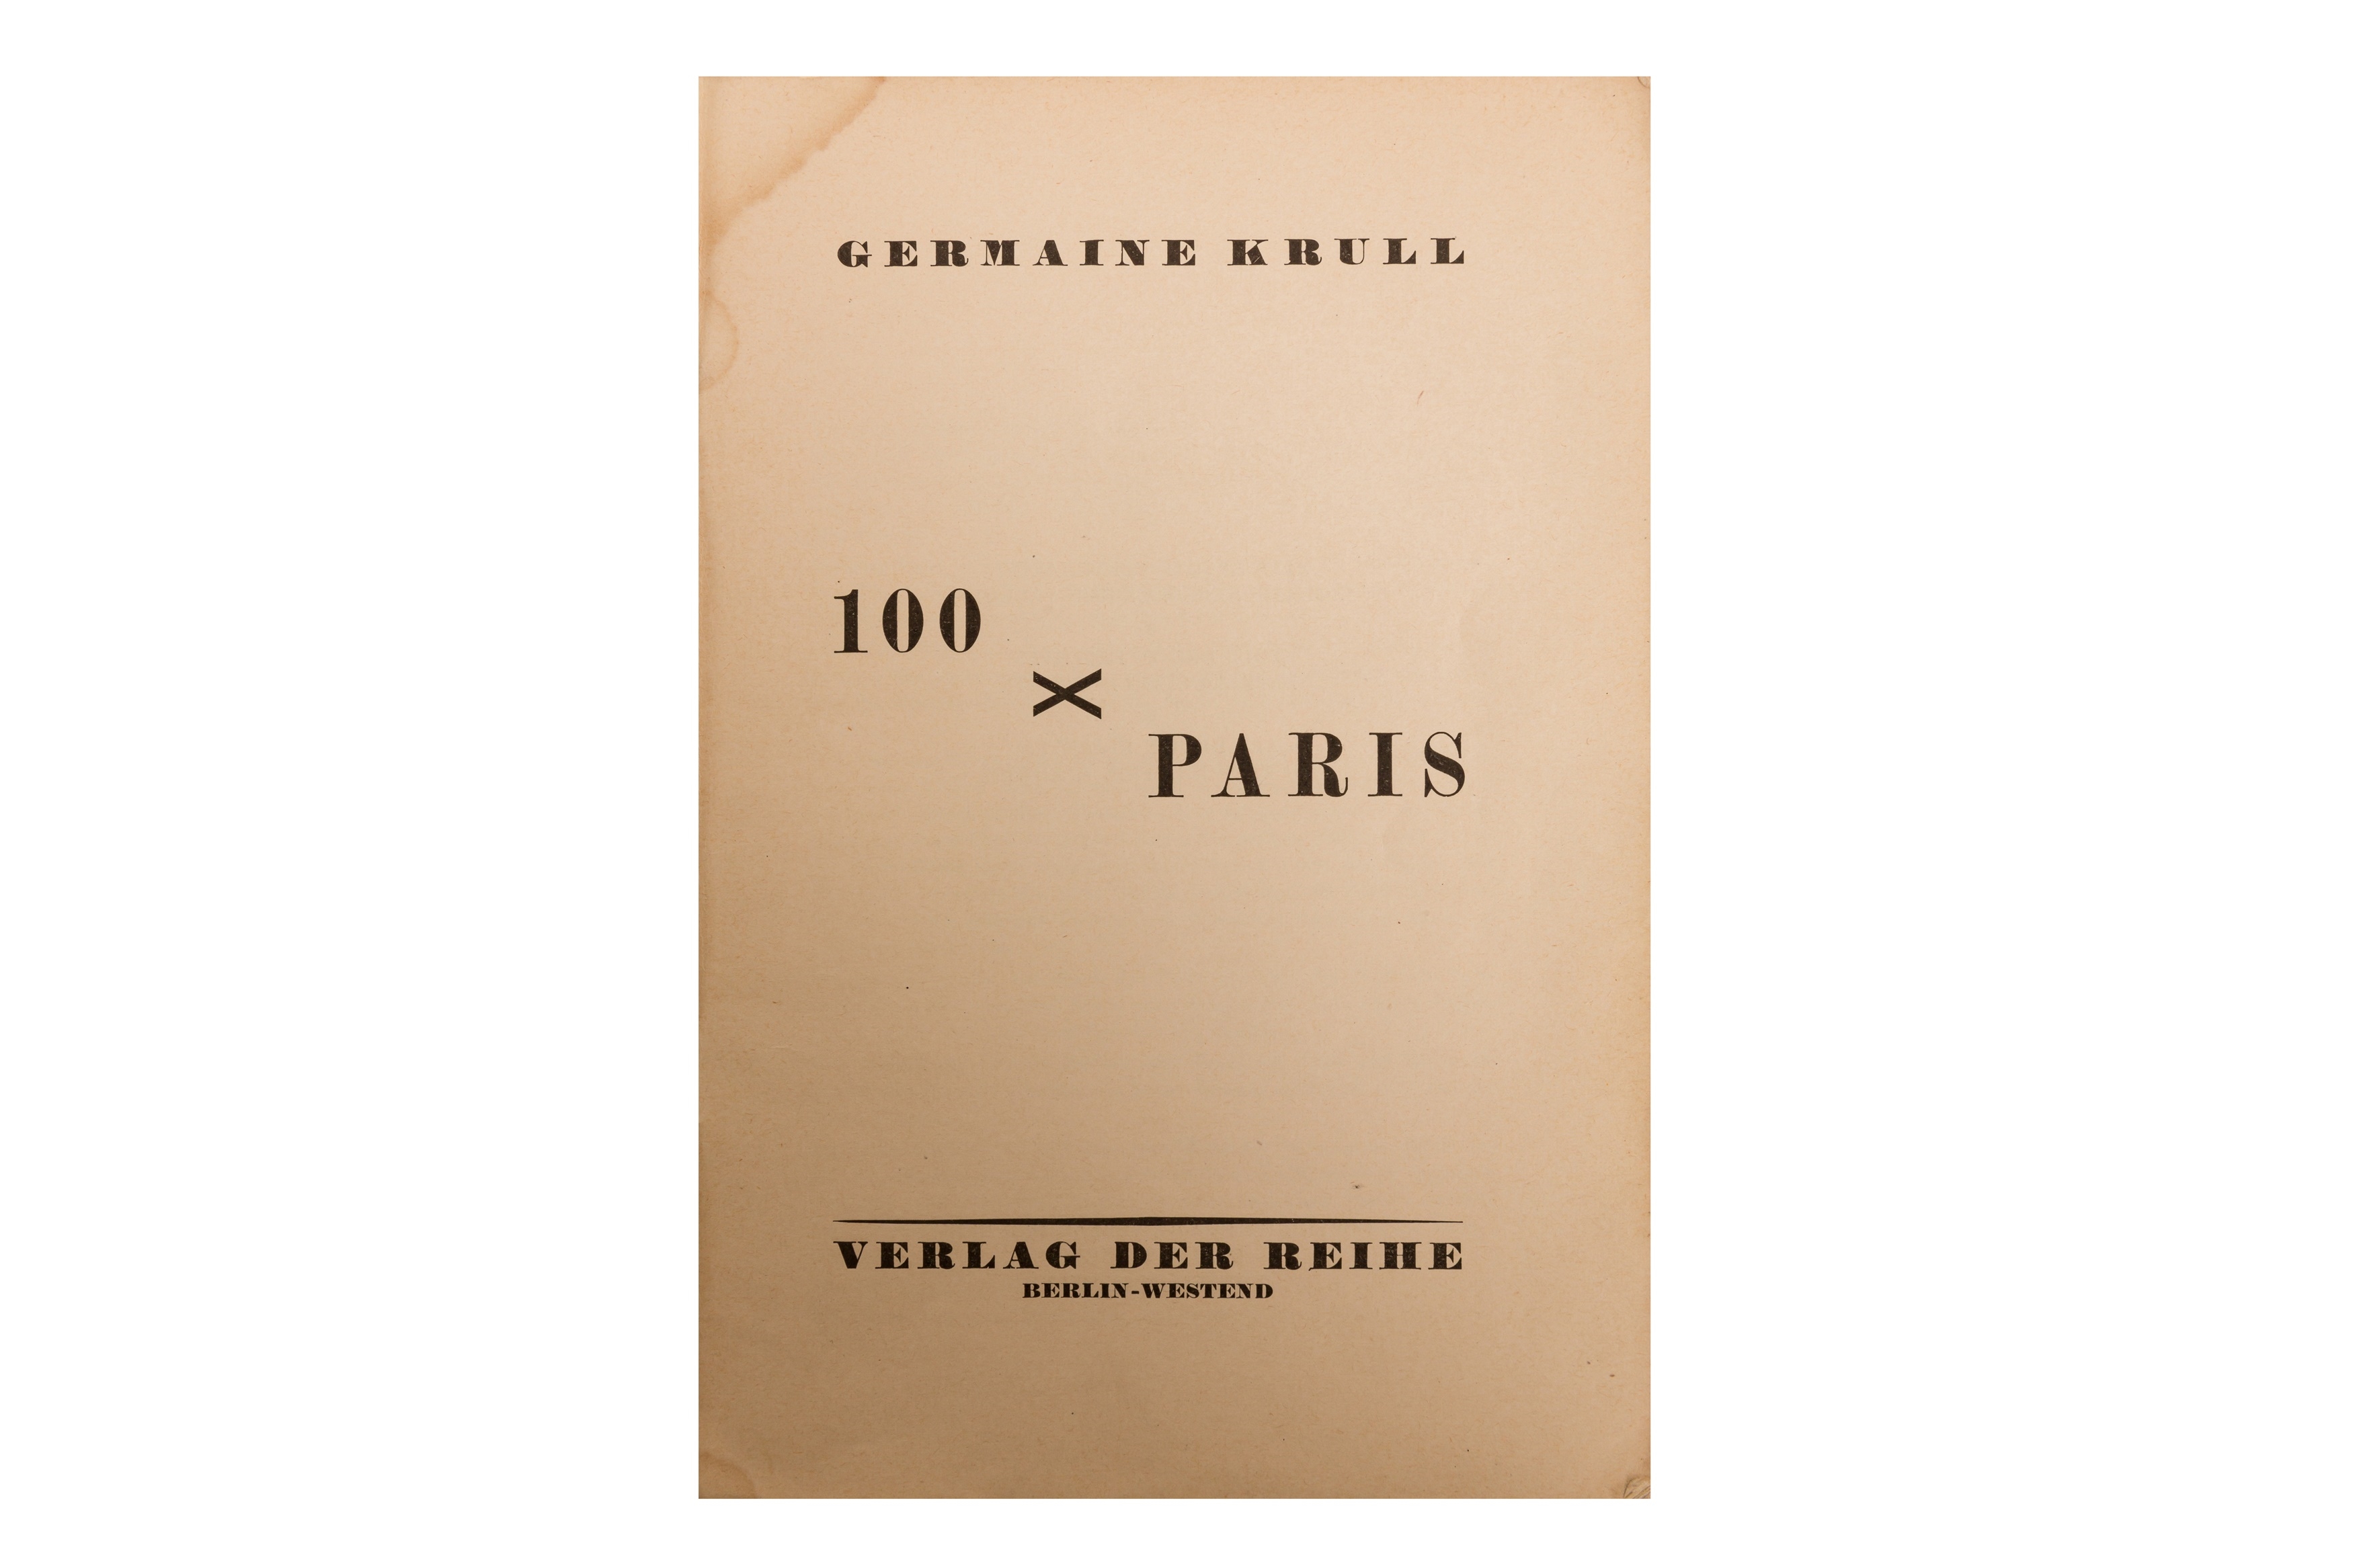 100 X PARIS by Germaine Krull, 1929